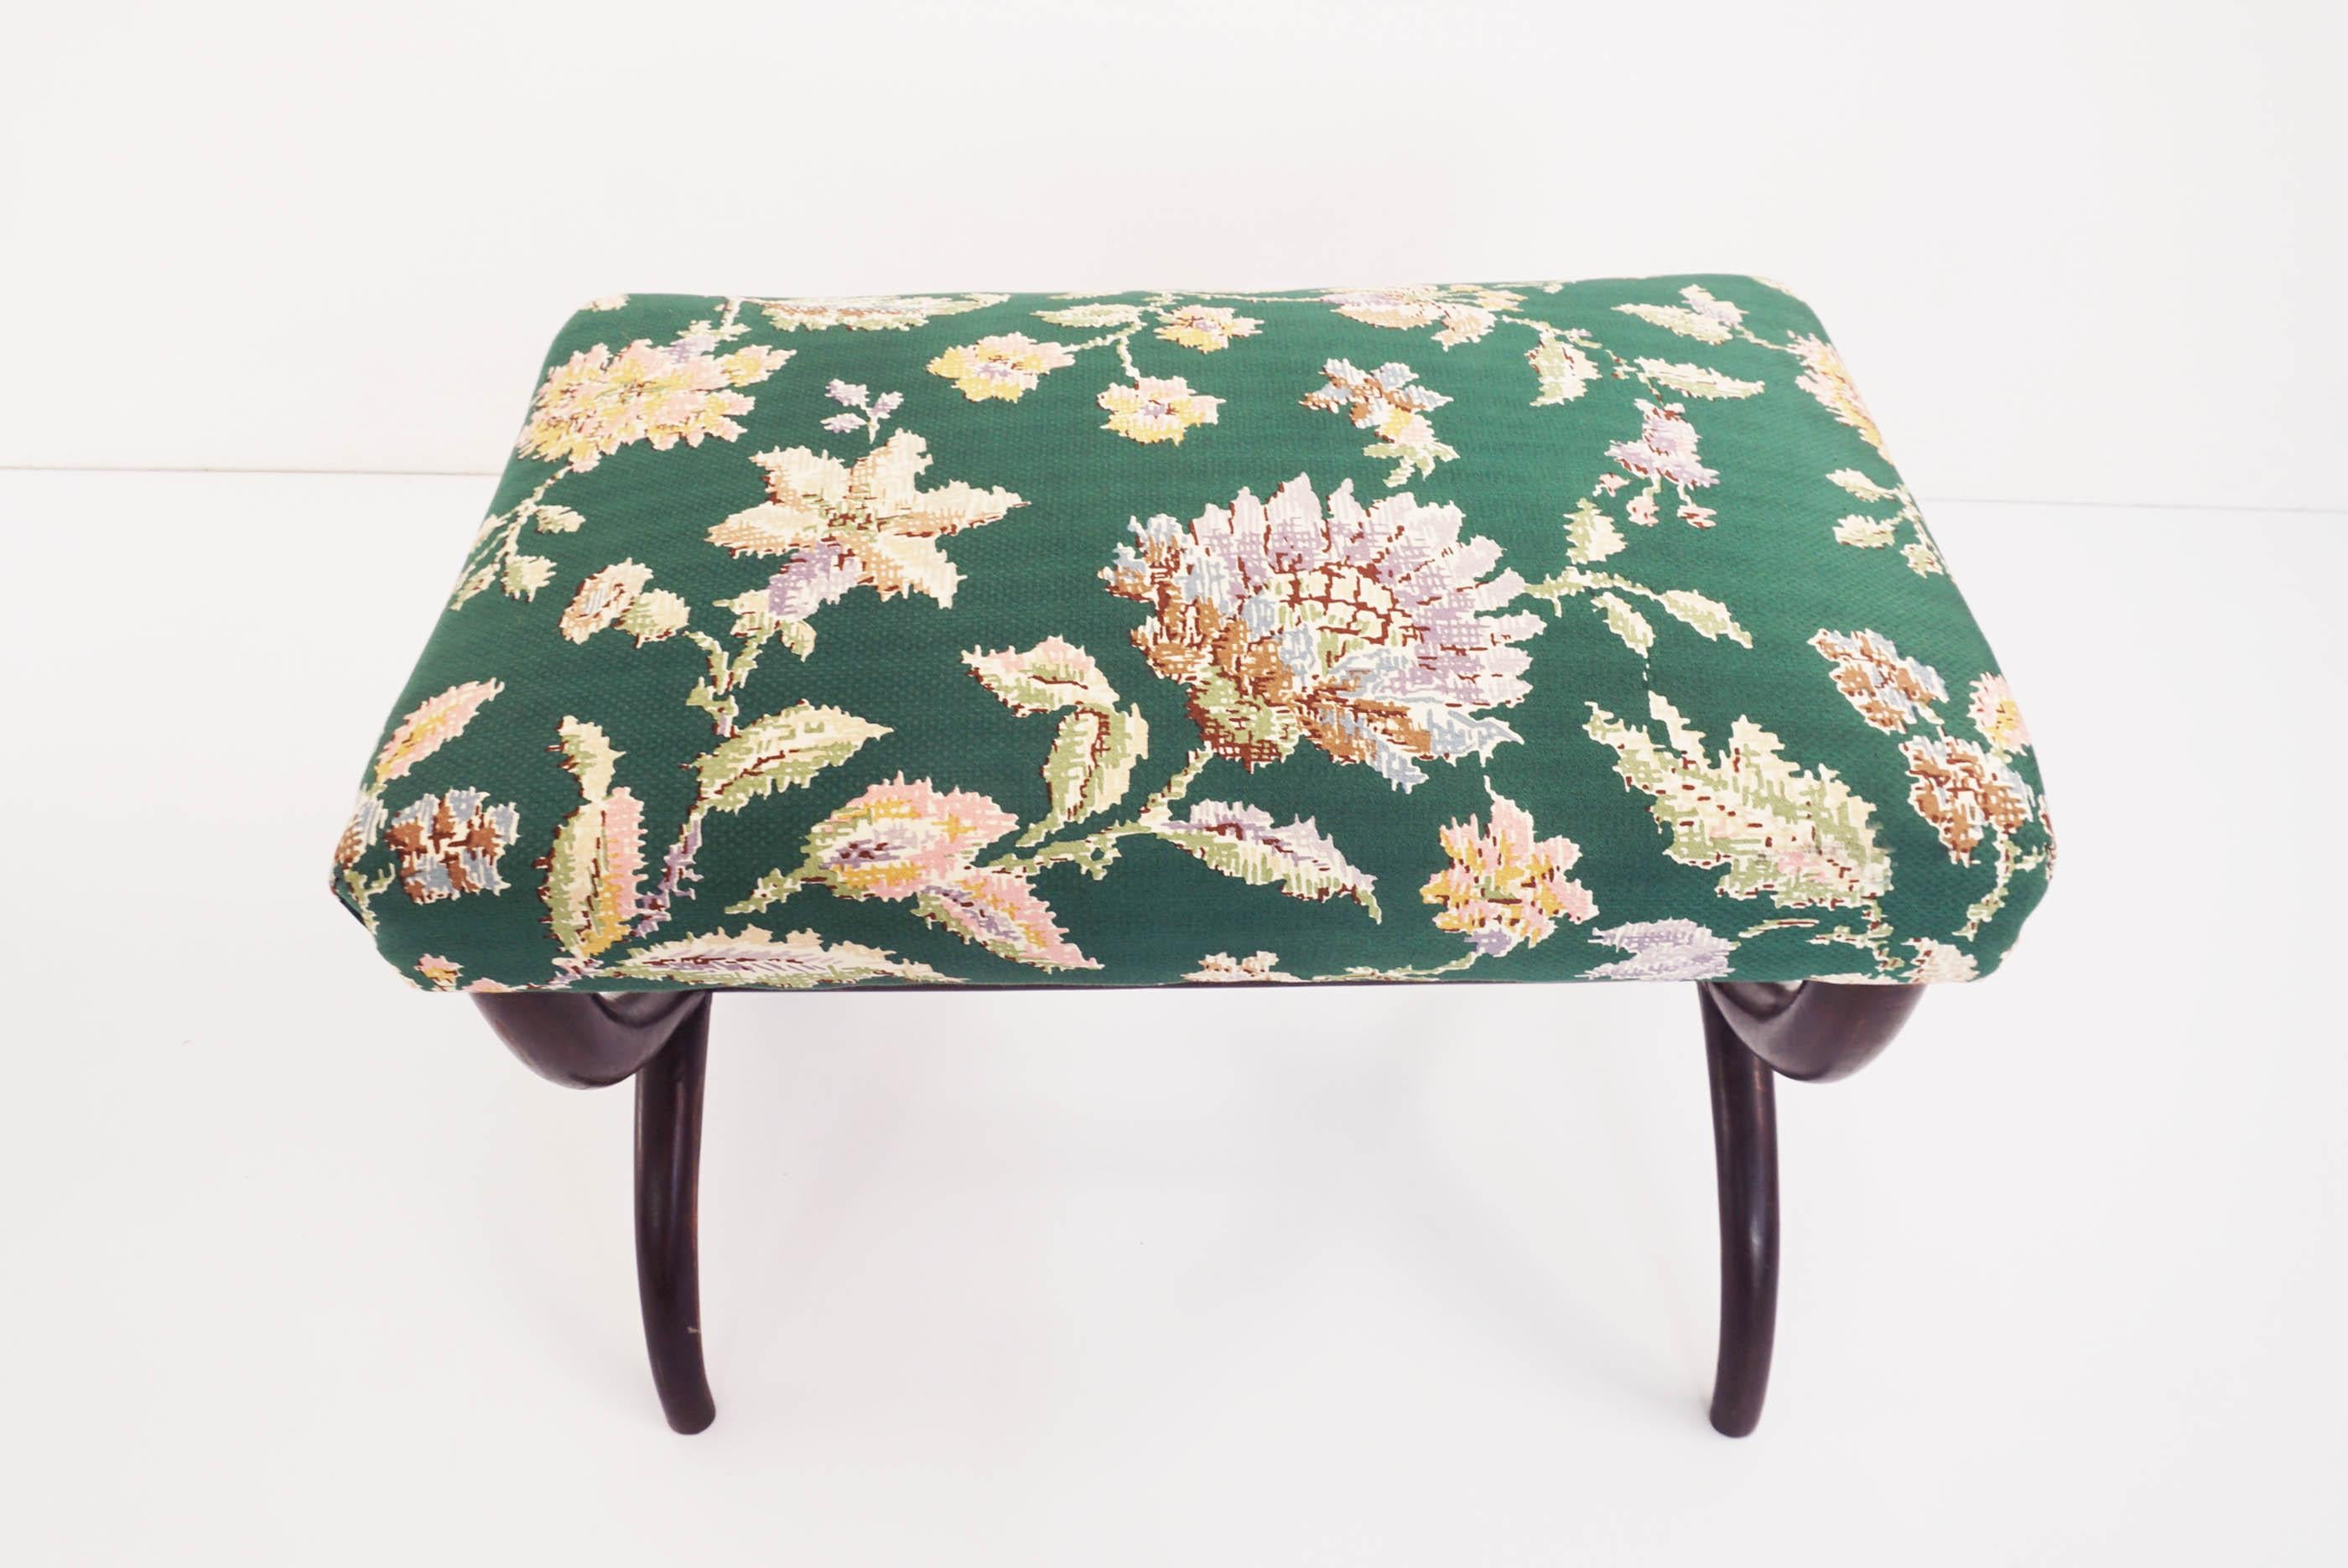 Upholstery Guglielmo Ulrich 1940 Italian Design Stool in Super Elegant Flowered Green Satin For Sale